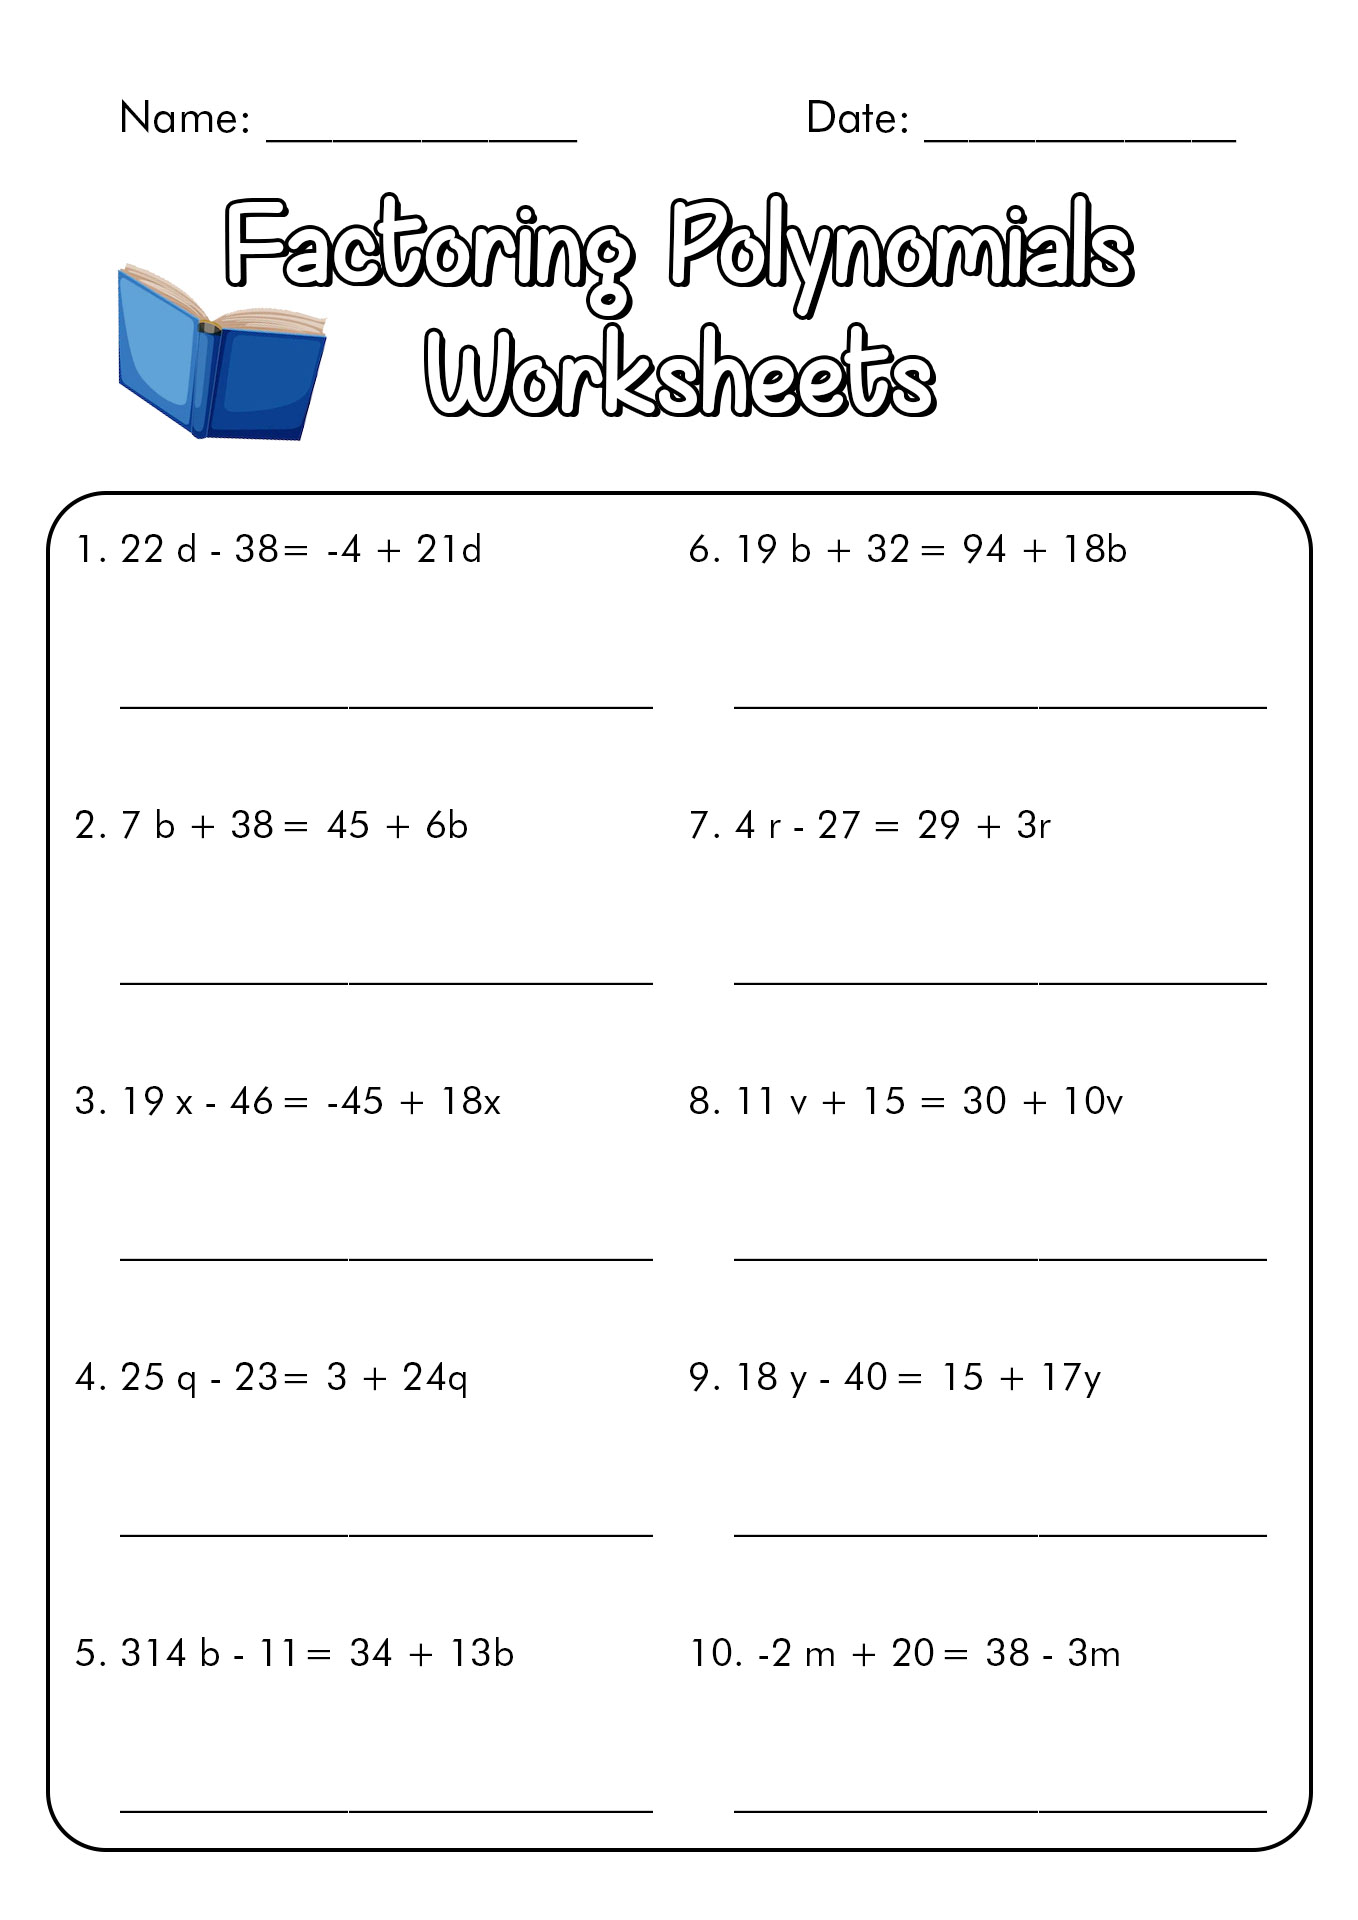 Algebraic Factorization Worksheets